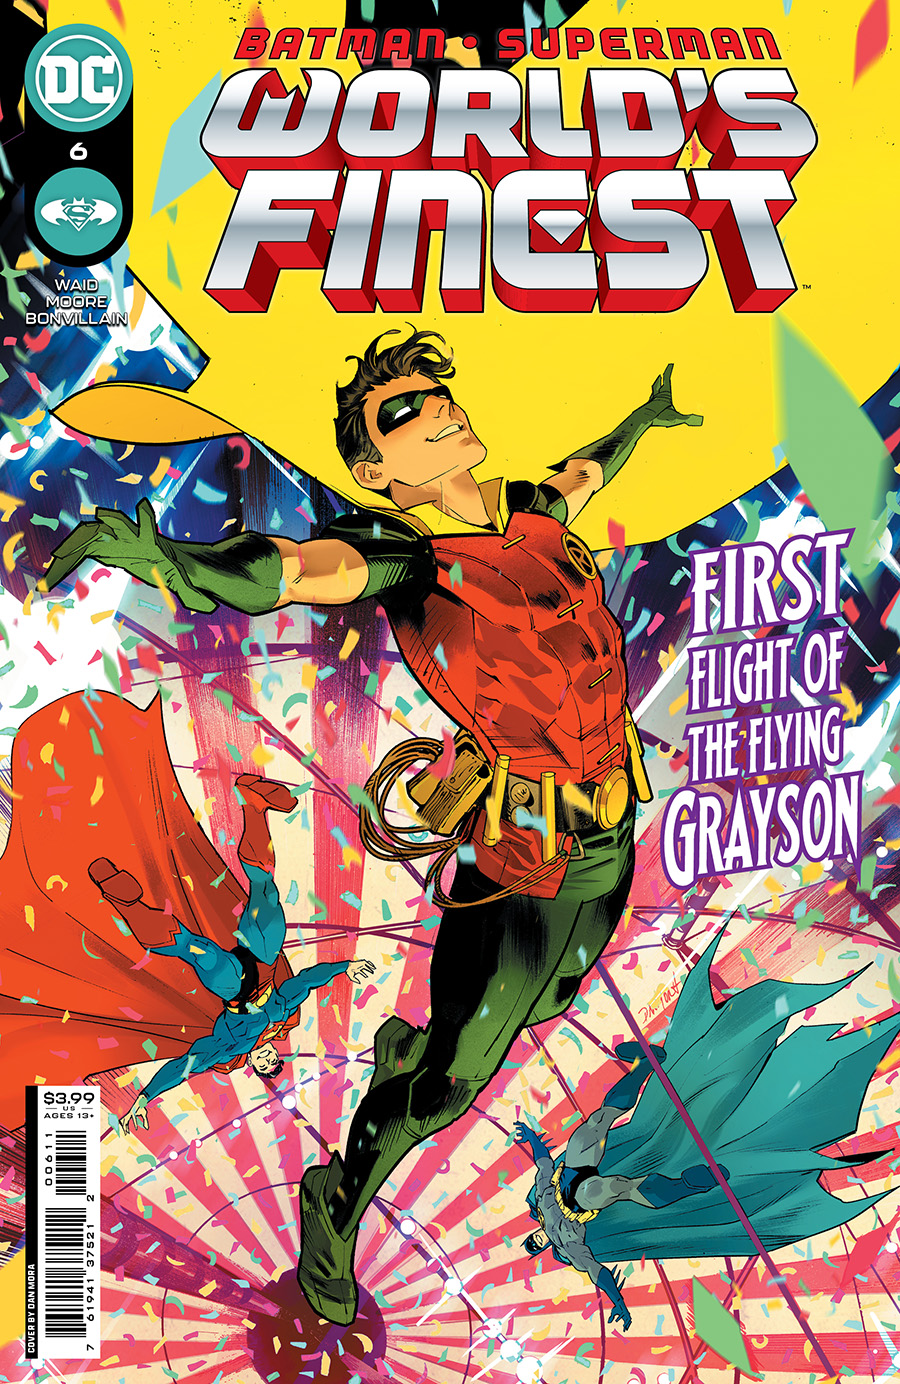 Batman Superman Worlds Finest #6 Cover A Regular Dan Mora Cover